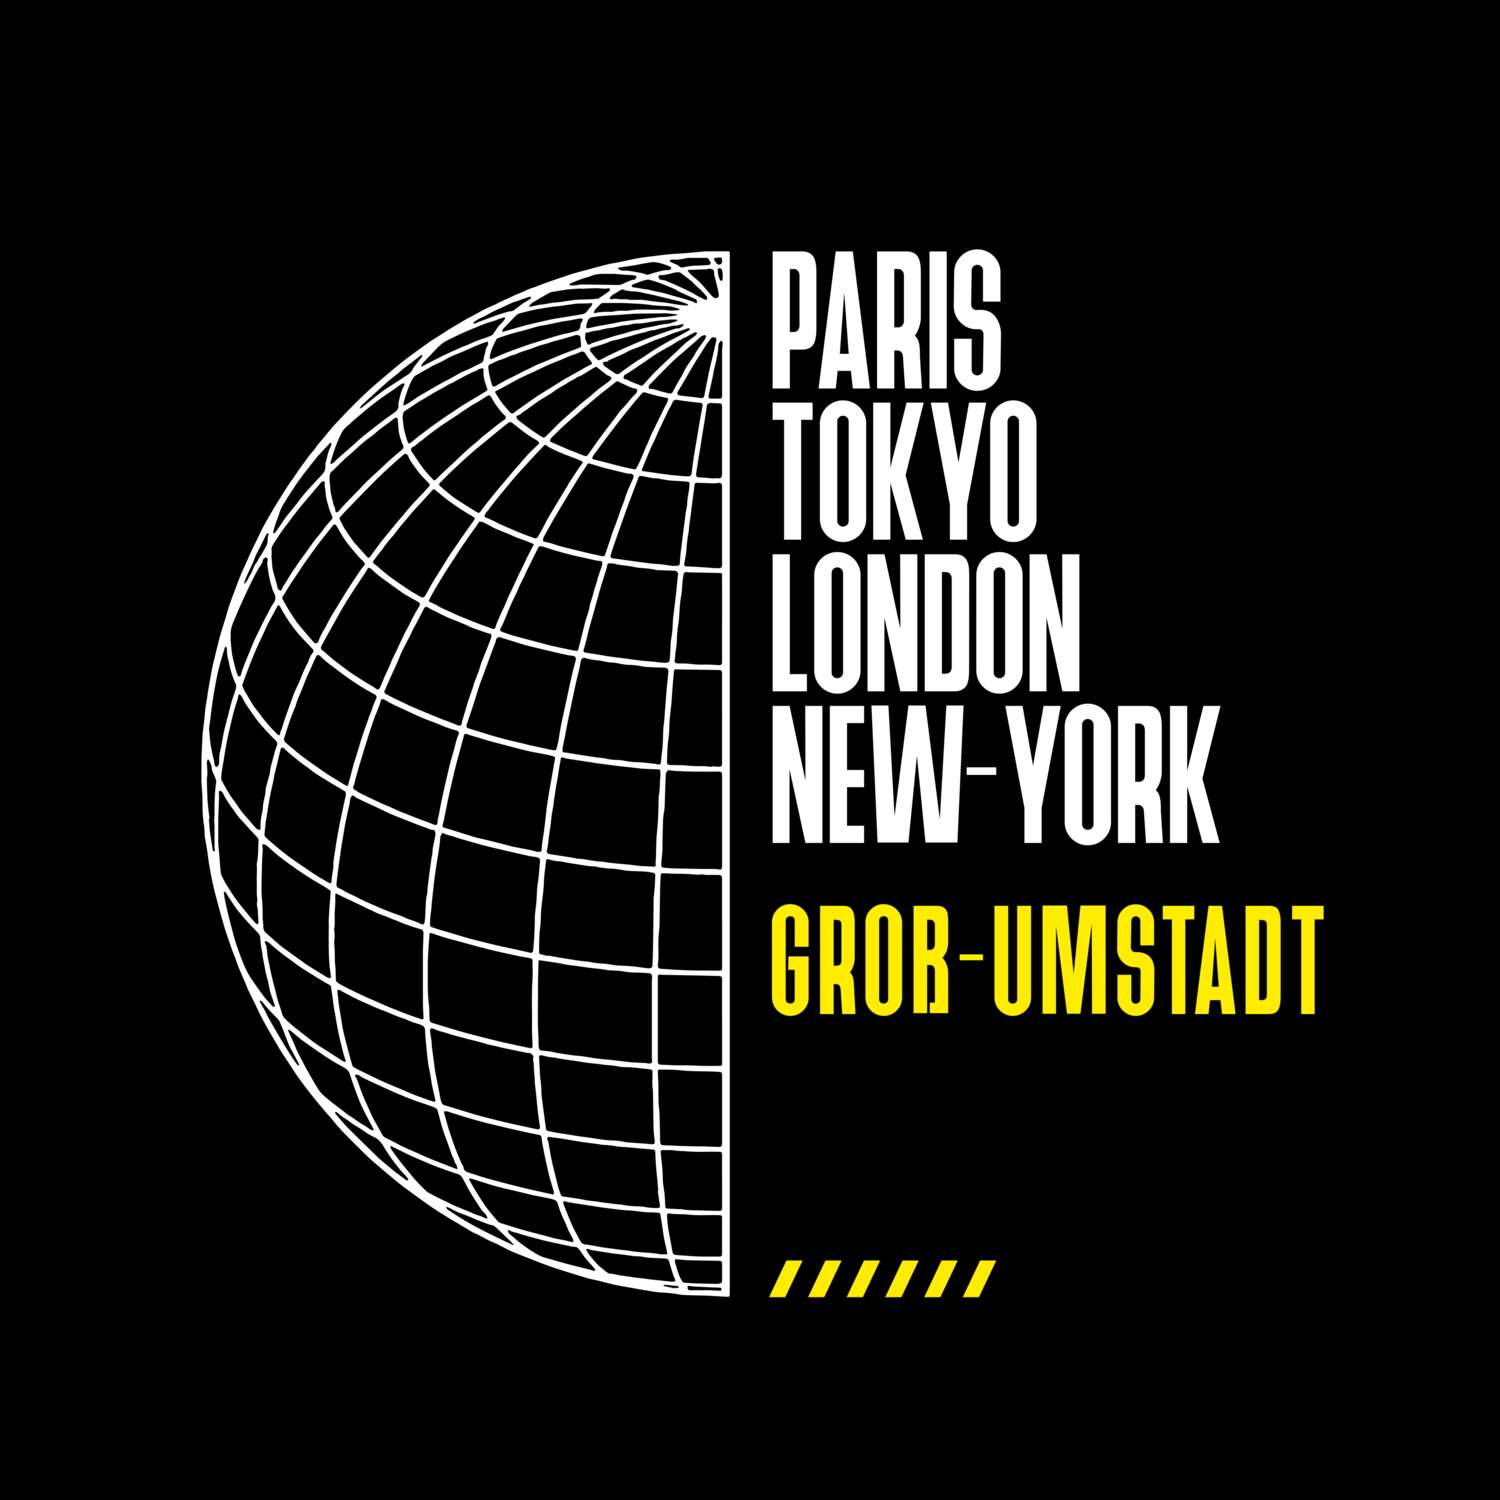 Groß-Umstadt T-Shirt »Paris Tokyo London«